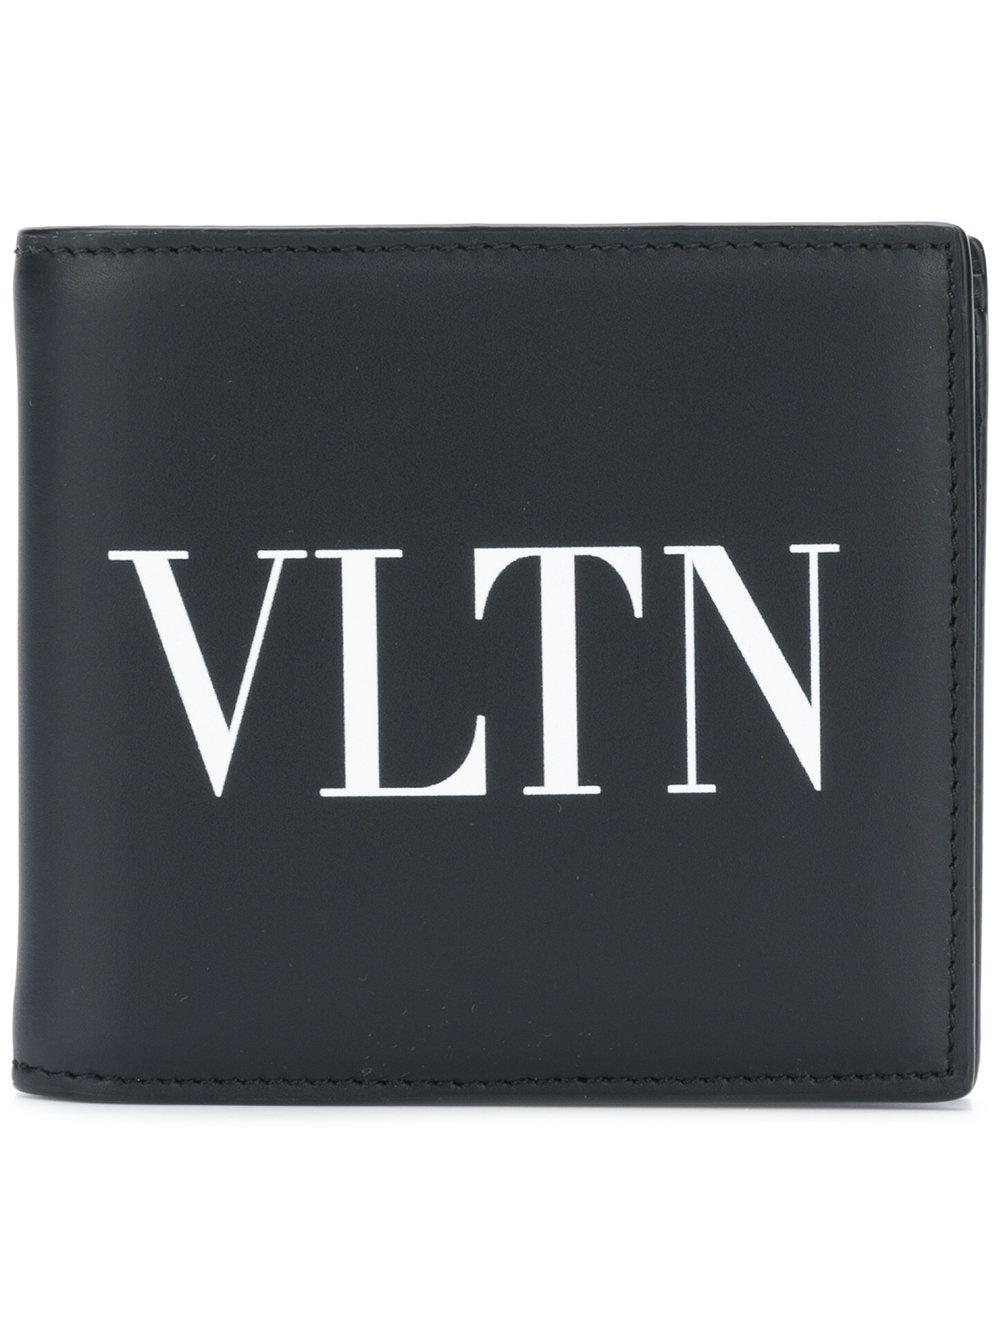 Valentino Garavani Leather Valentino Garavani Vltn Wallet in Black 